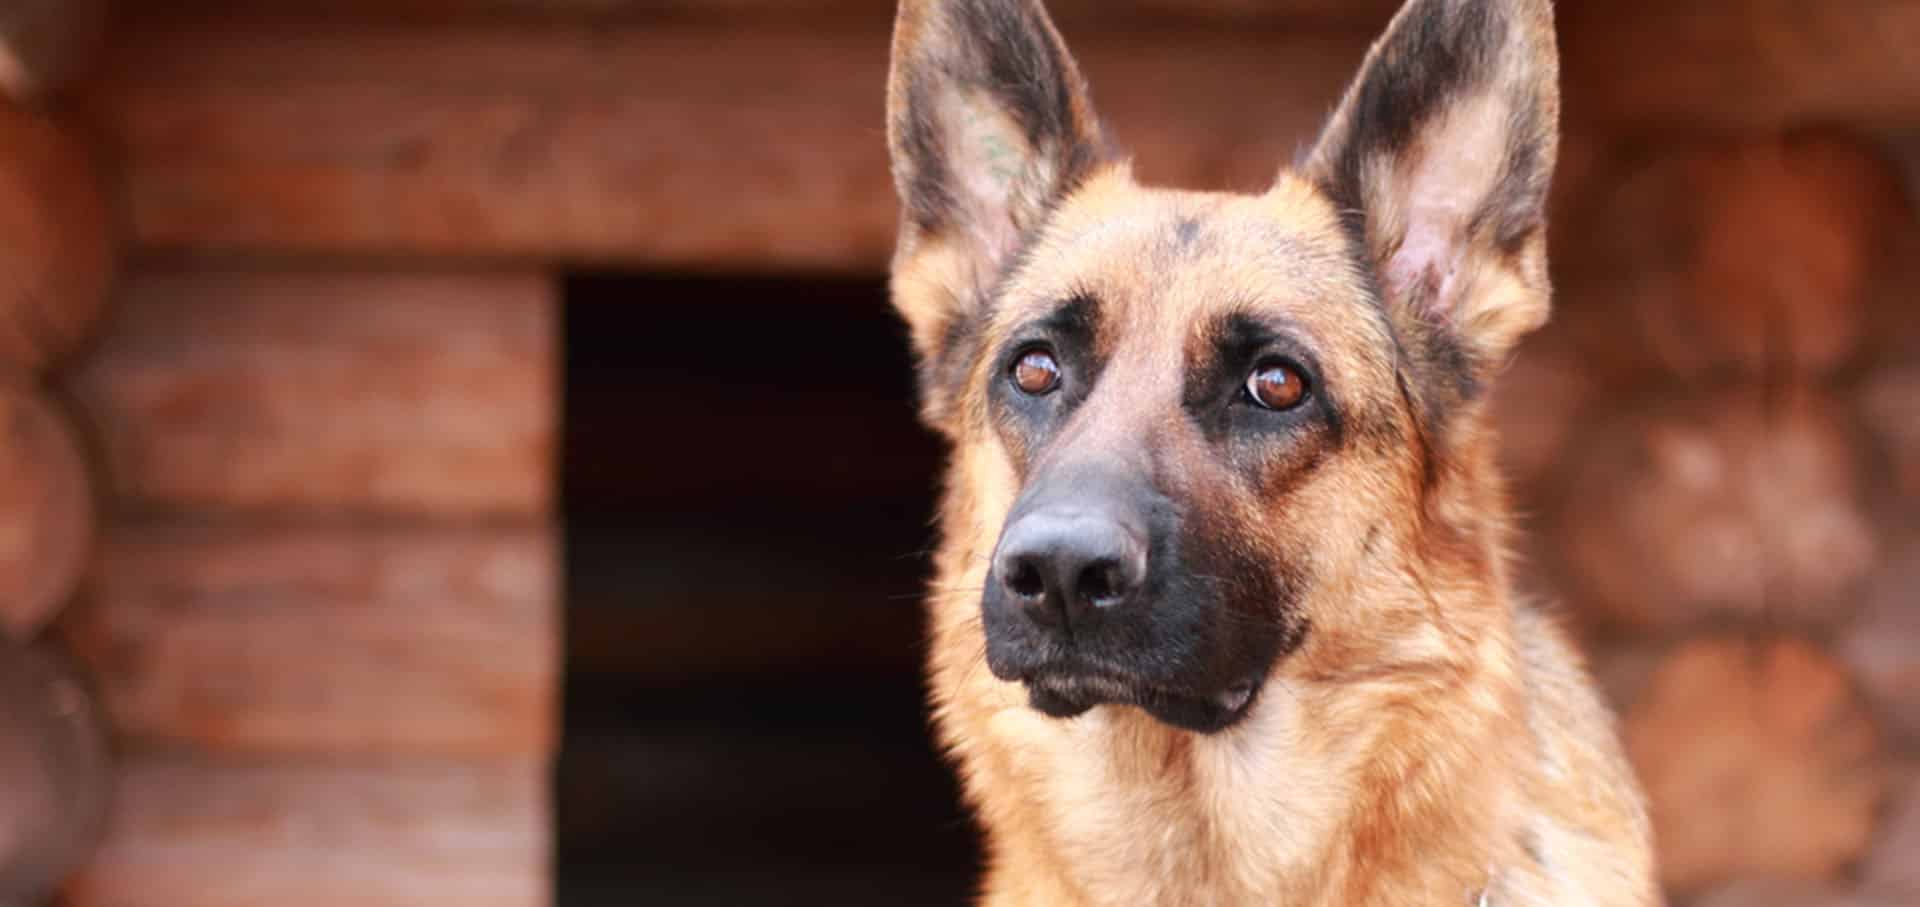 Close up view of German Shepherd — Best Veterinary Services in Bundaberg, QLD